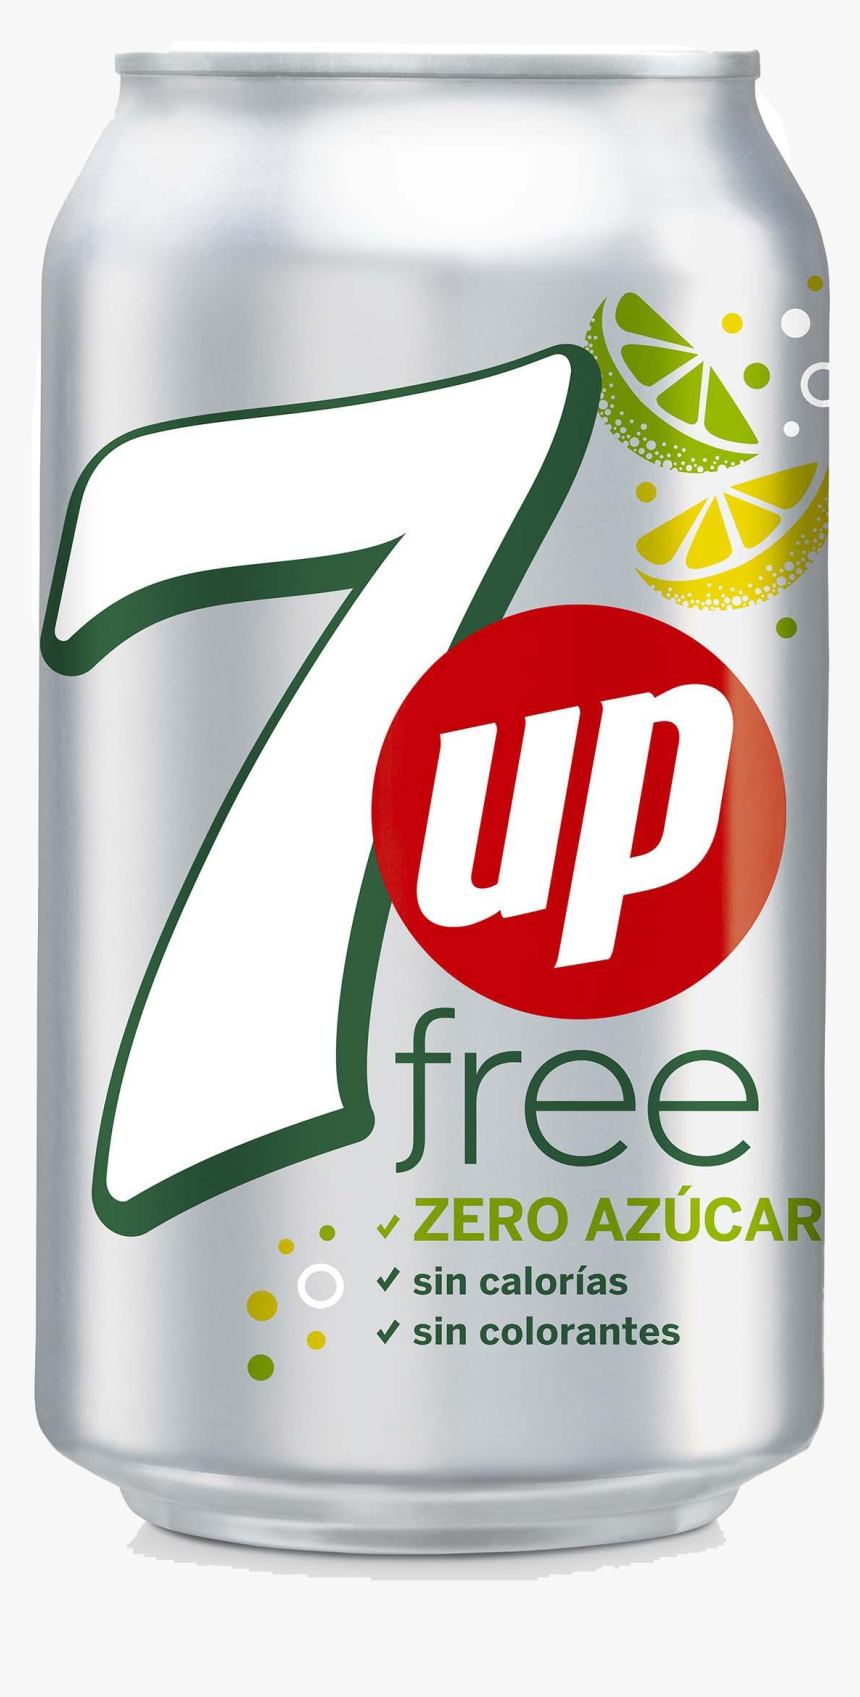 Diet-soda - 7up Sugar Free, HD Png Download, Free Download